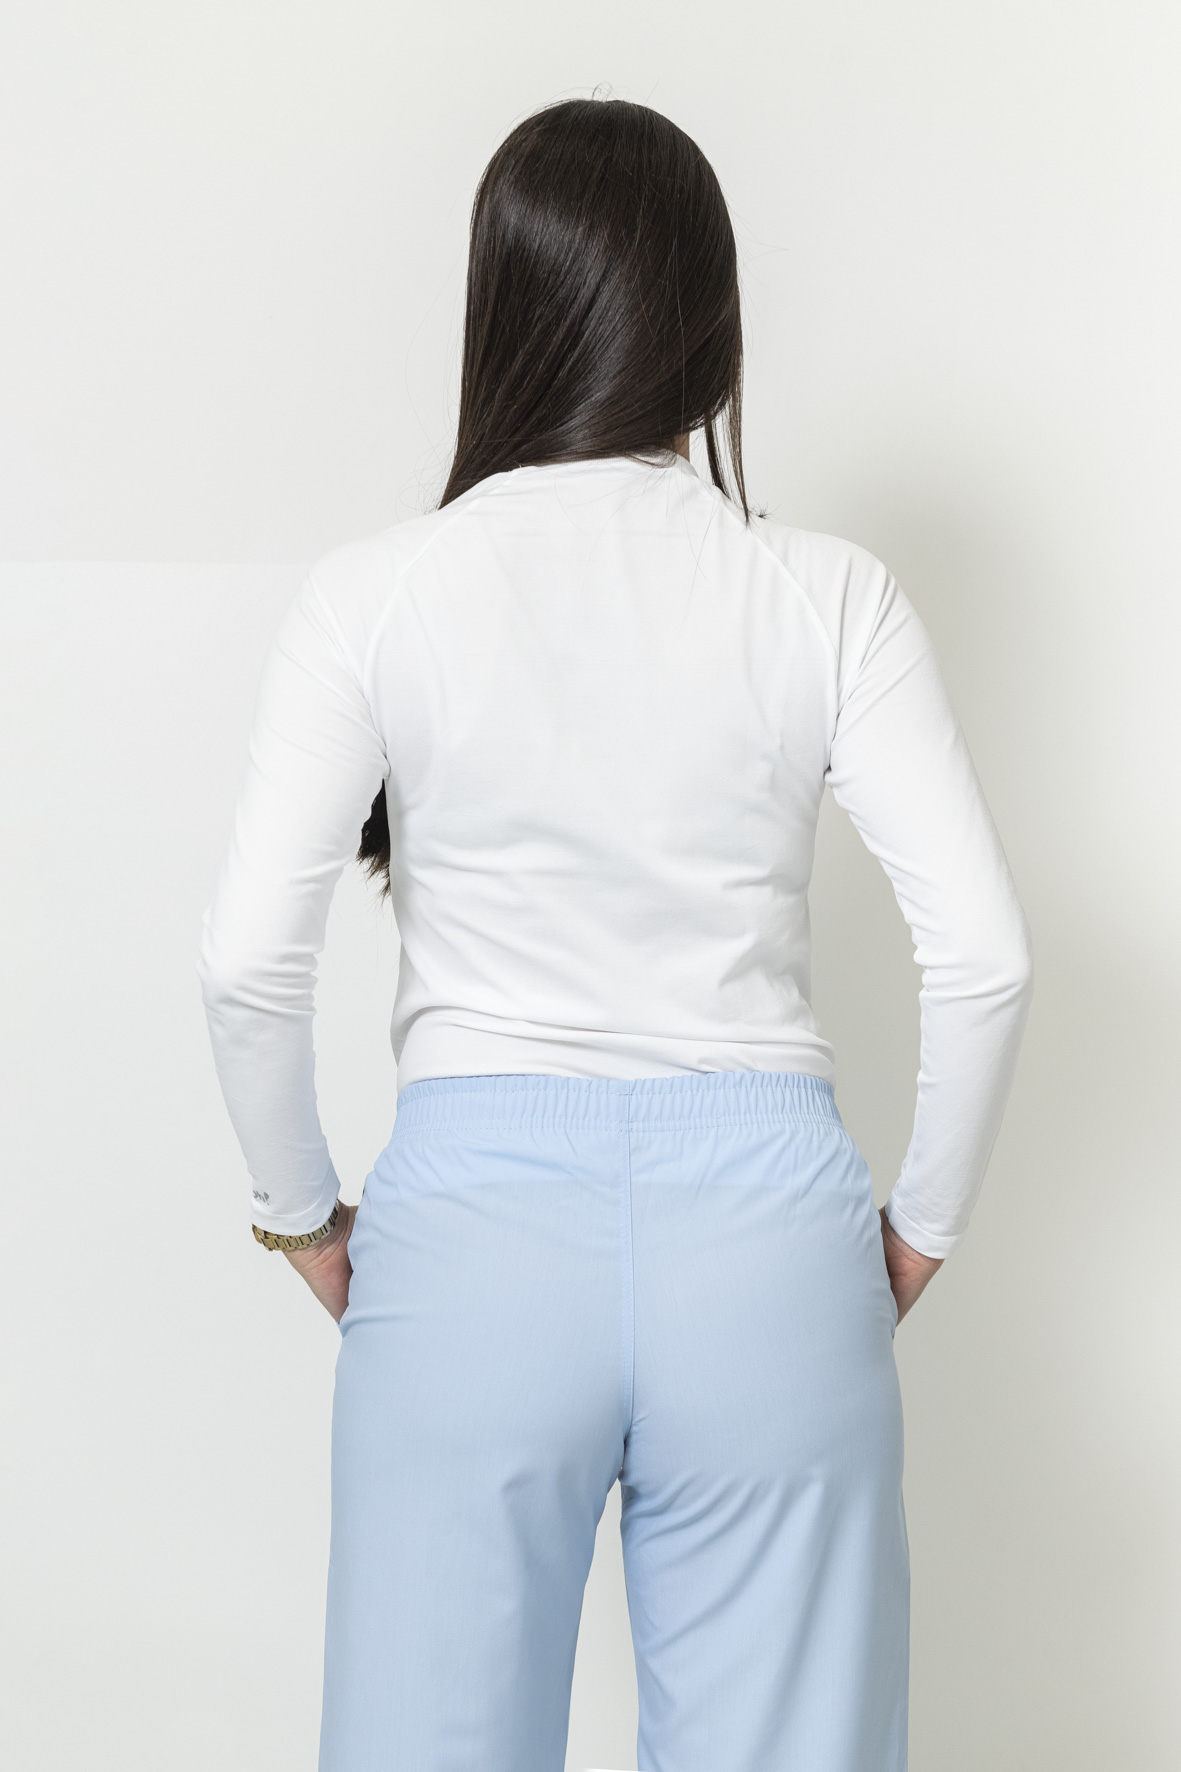 Camiseta térmica blanca (mujer) - Oh! Wear